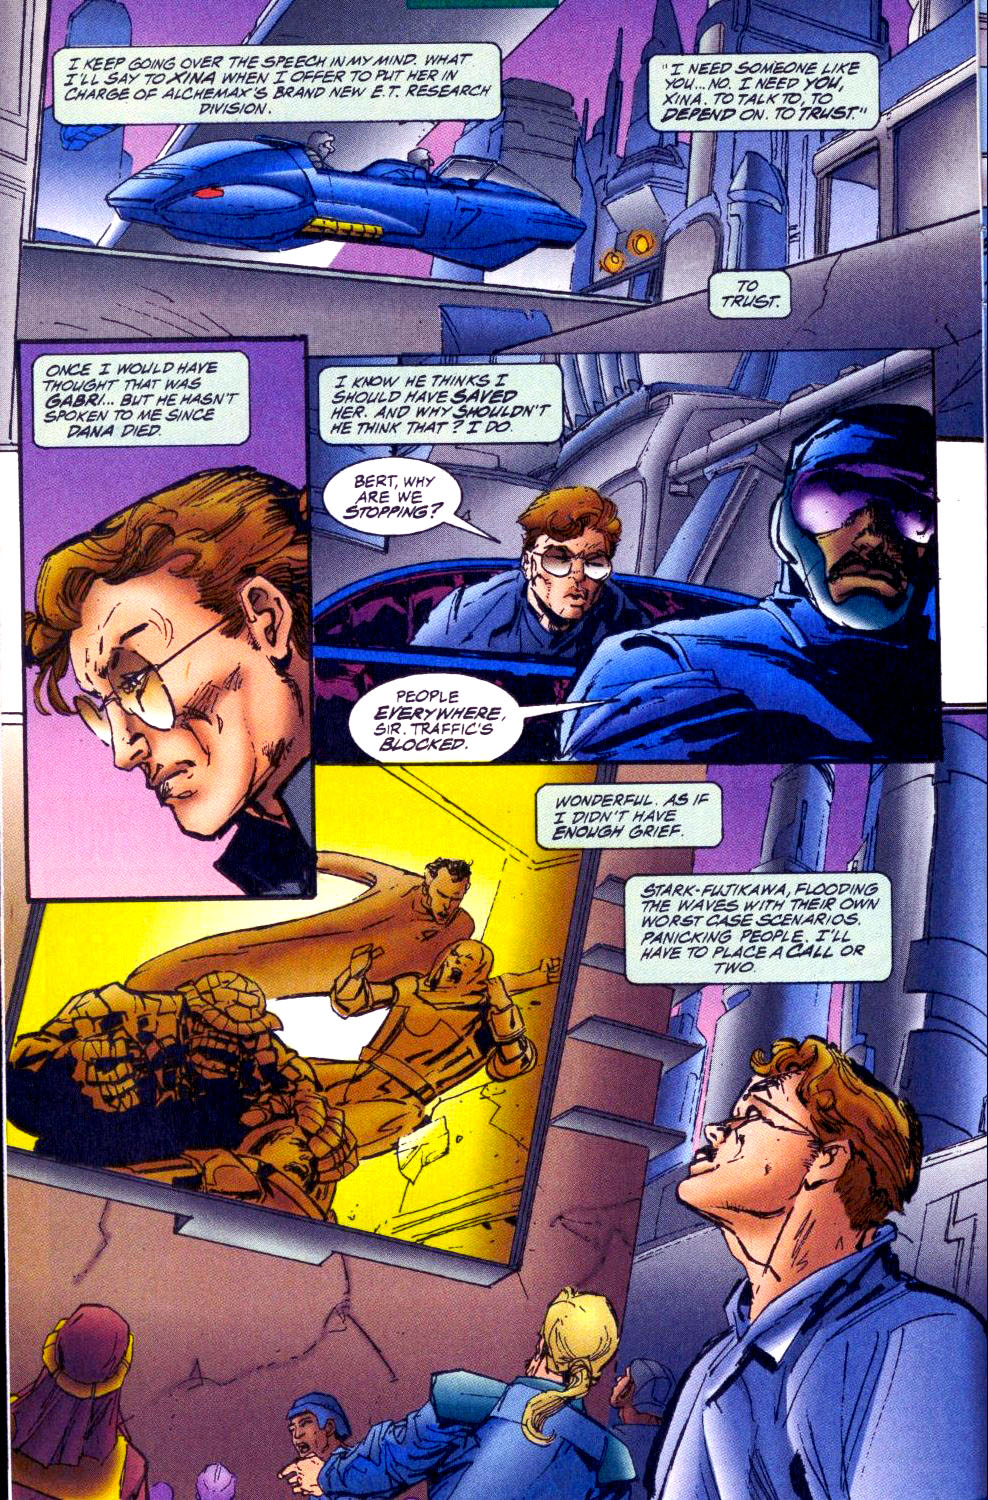 Spider-Man 2099 (1992) issue 42 - Page 7